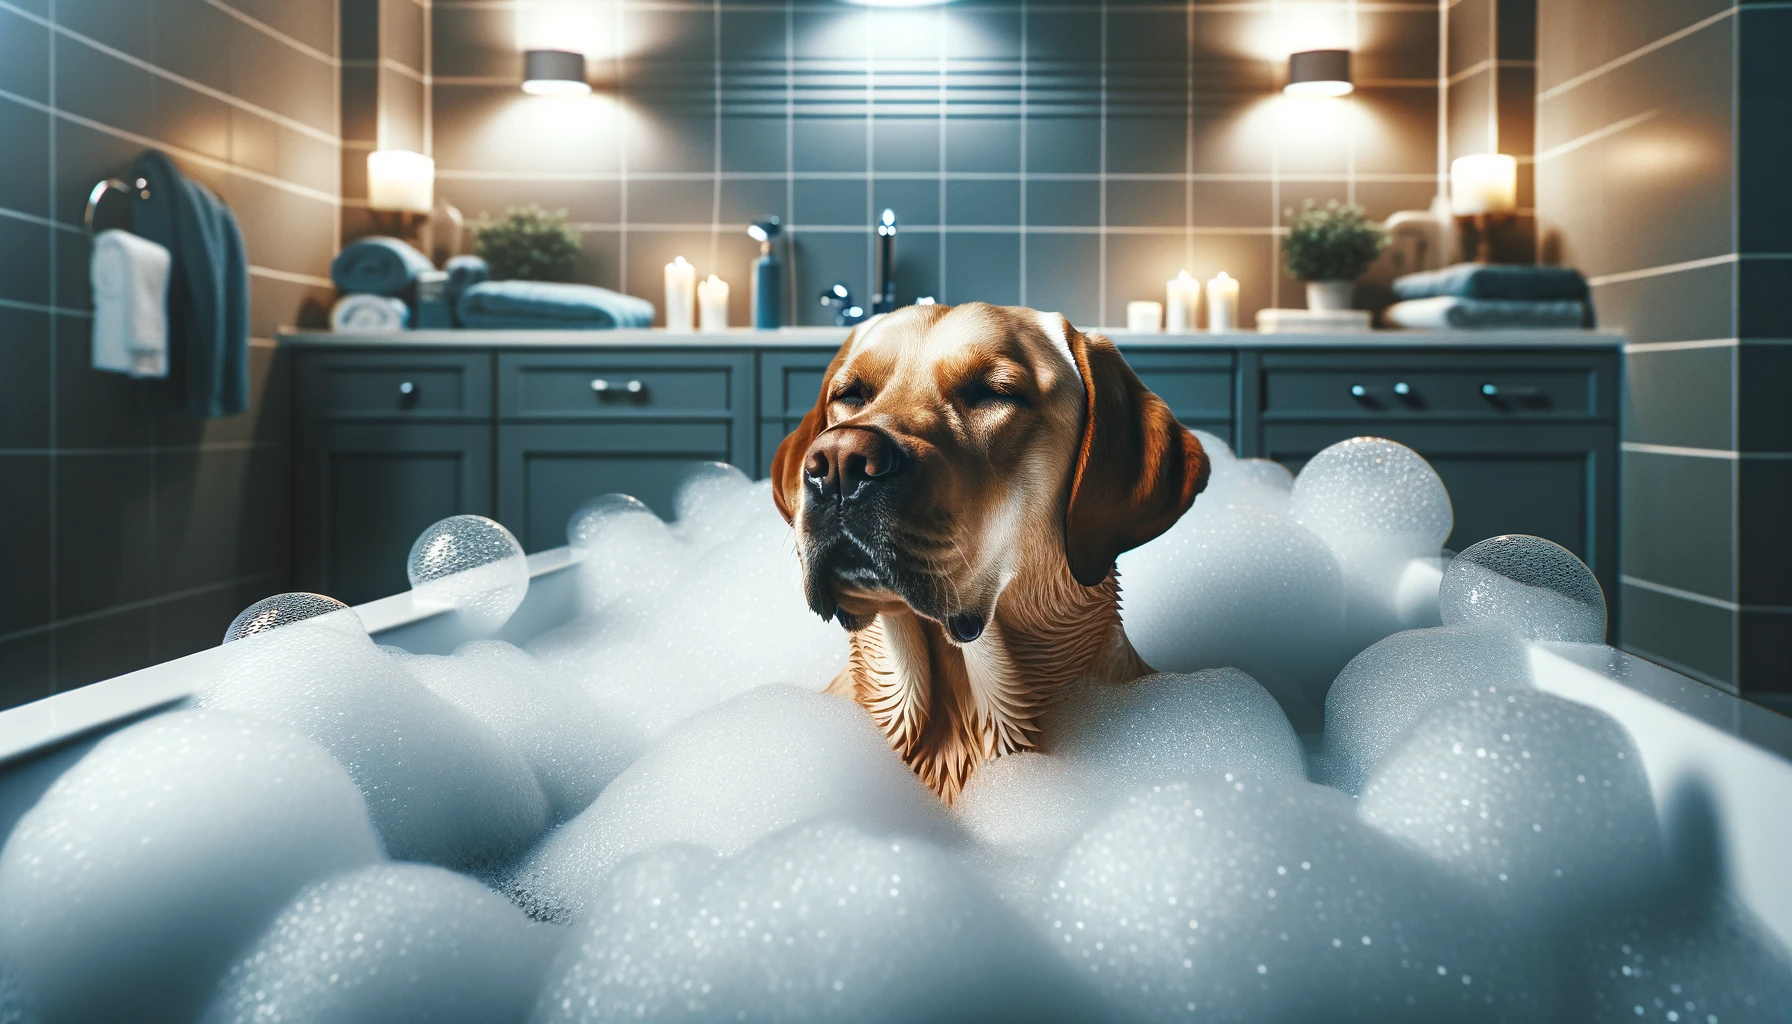 Labmaraner basking in a spa-like bubble bath - total bliss